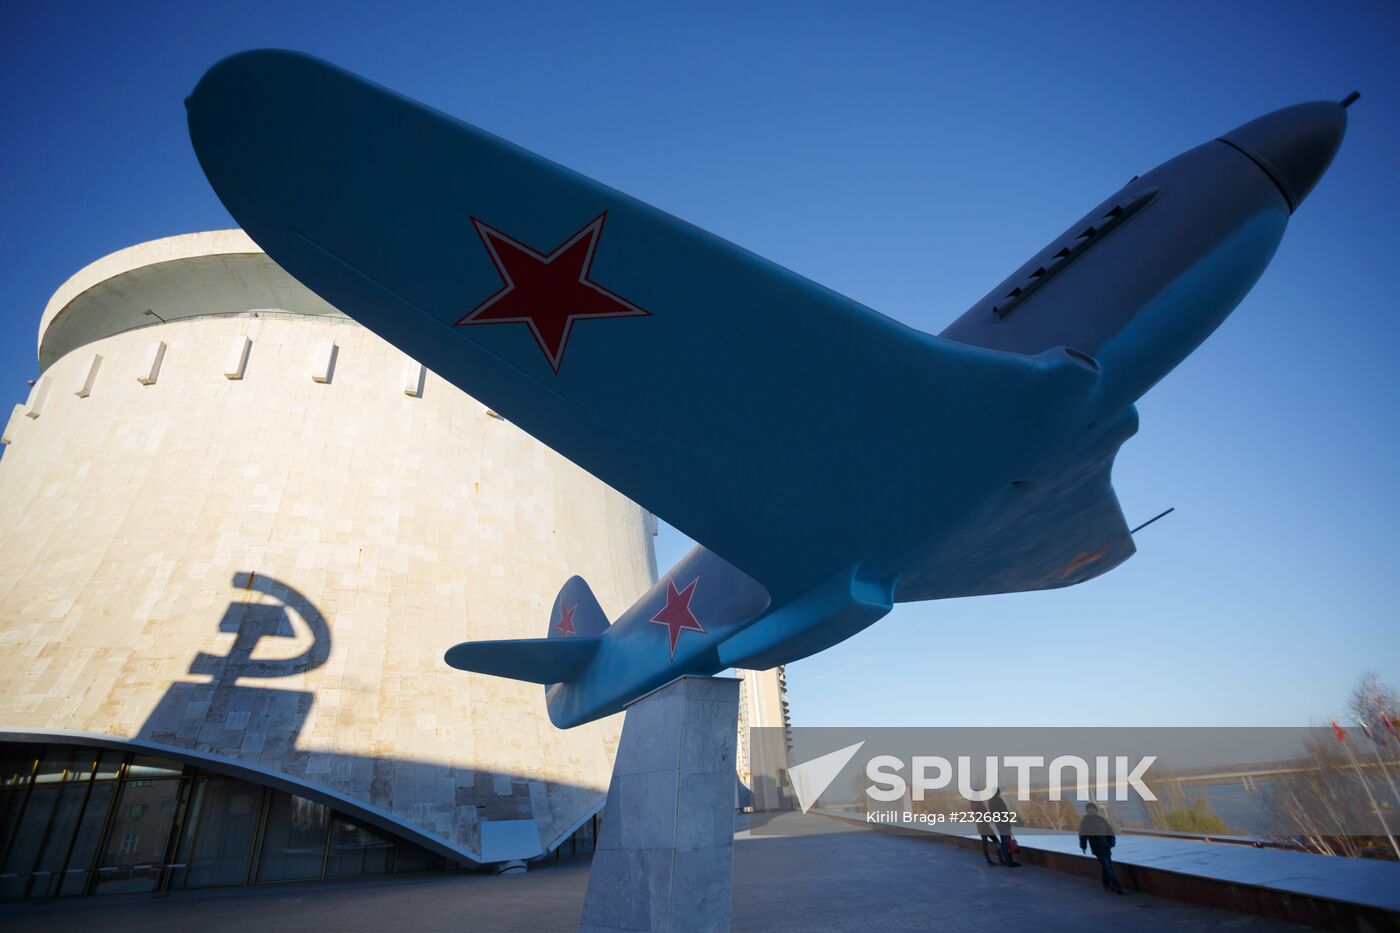 Battle of Stalingrad museum-reserve